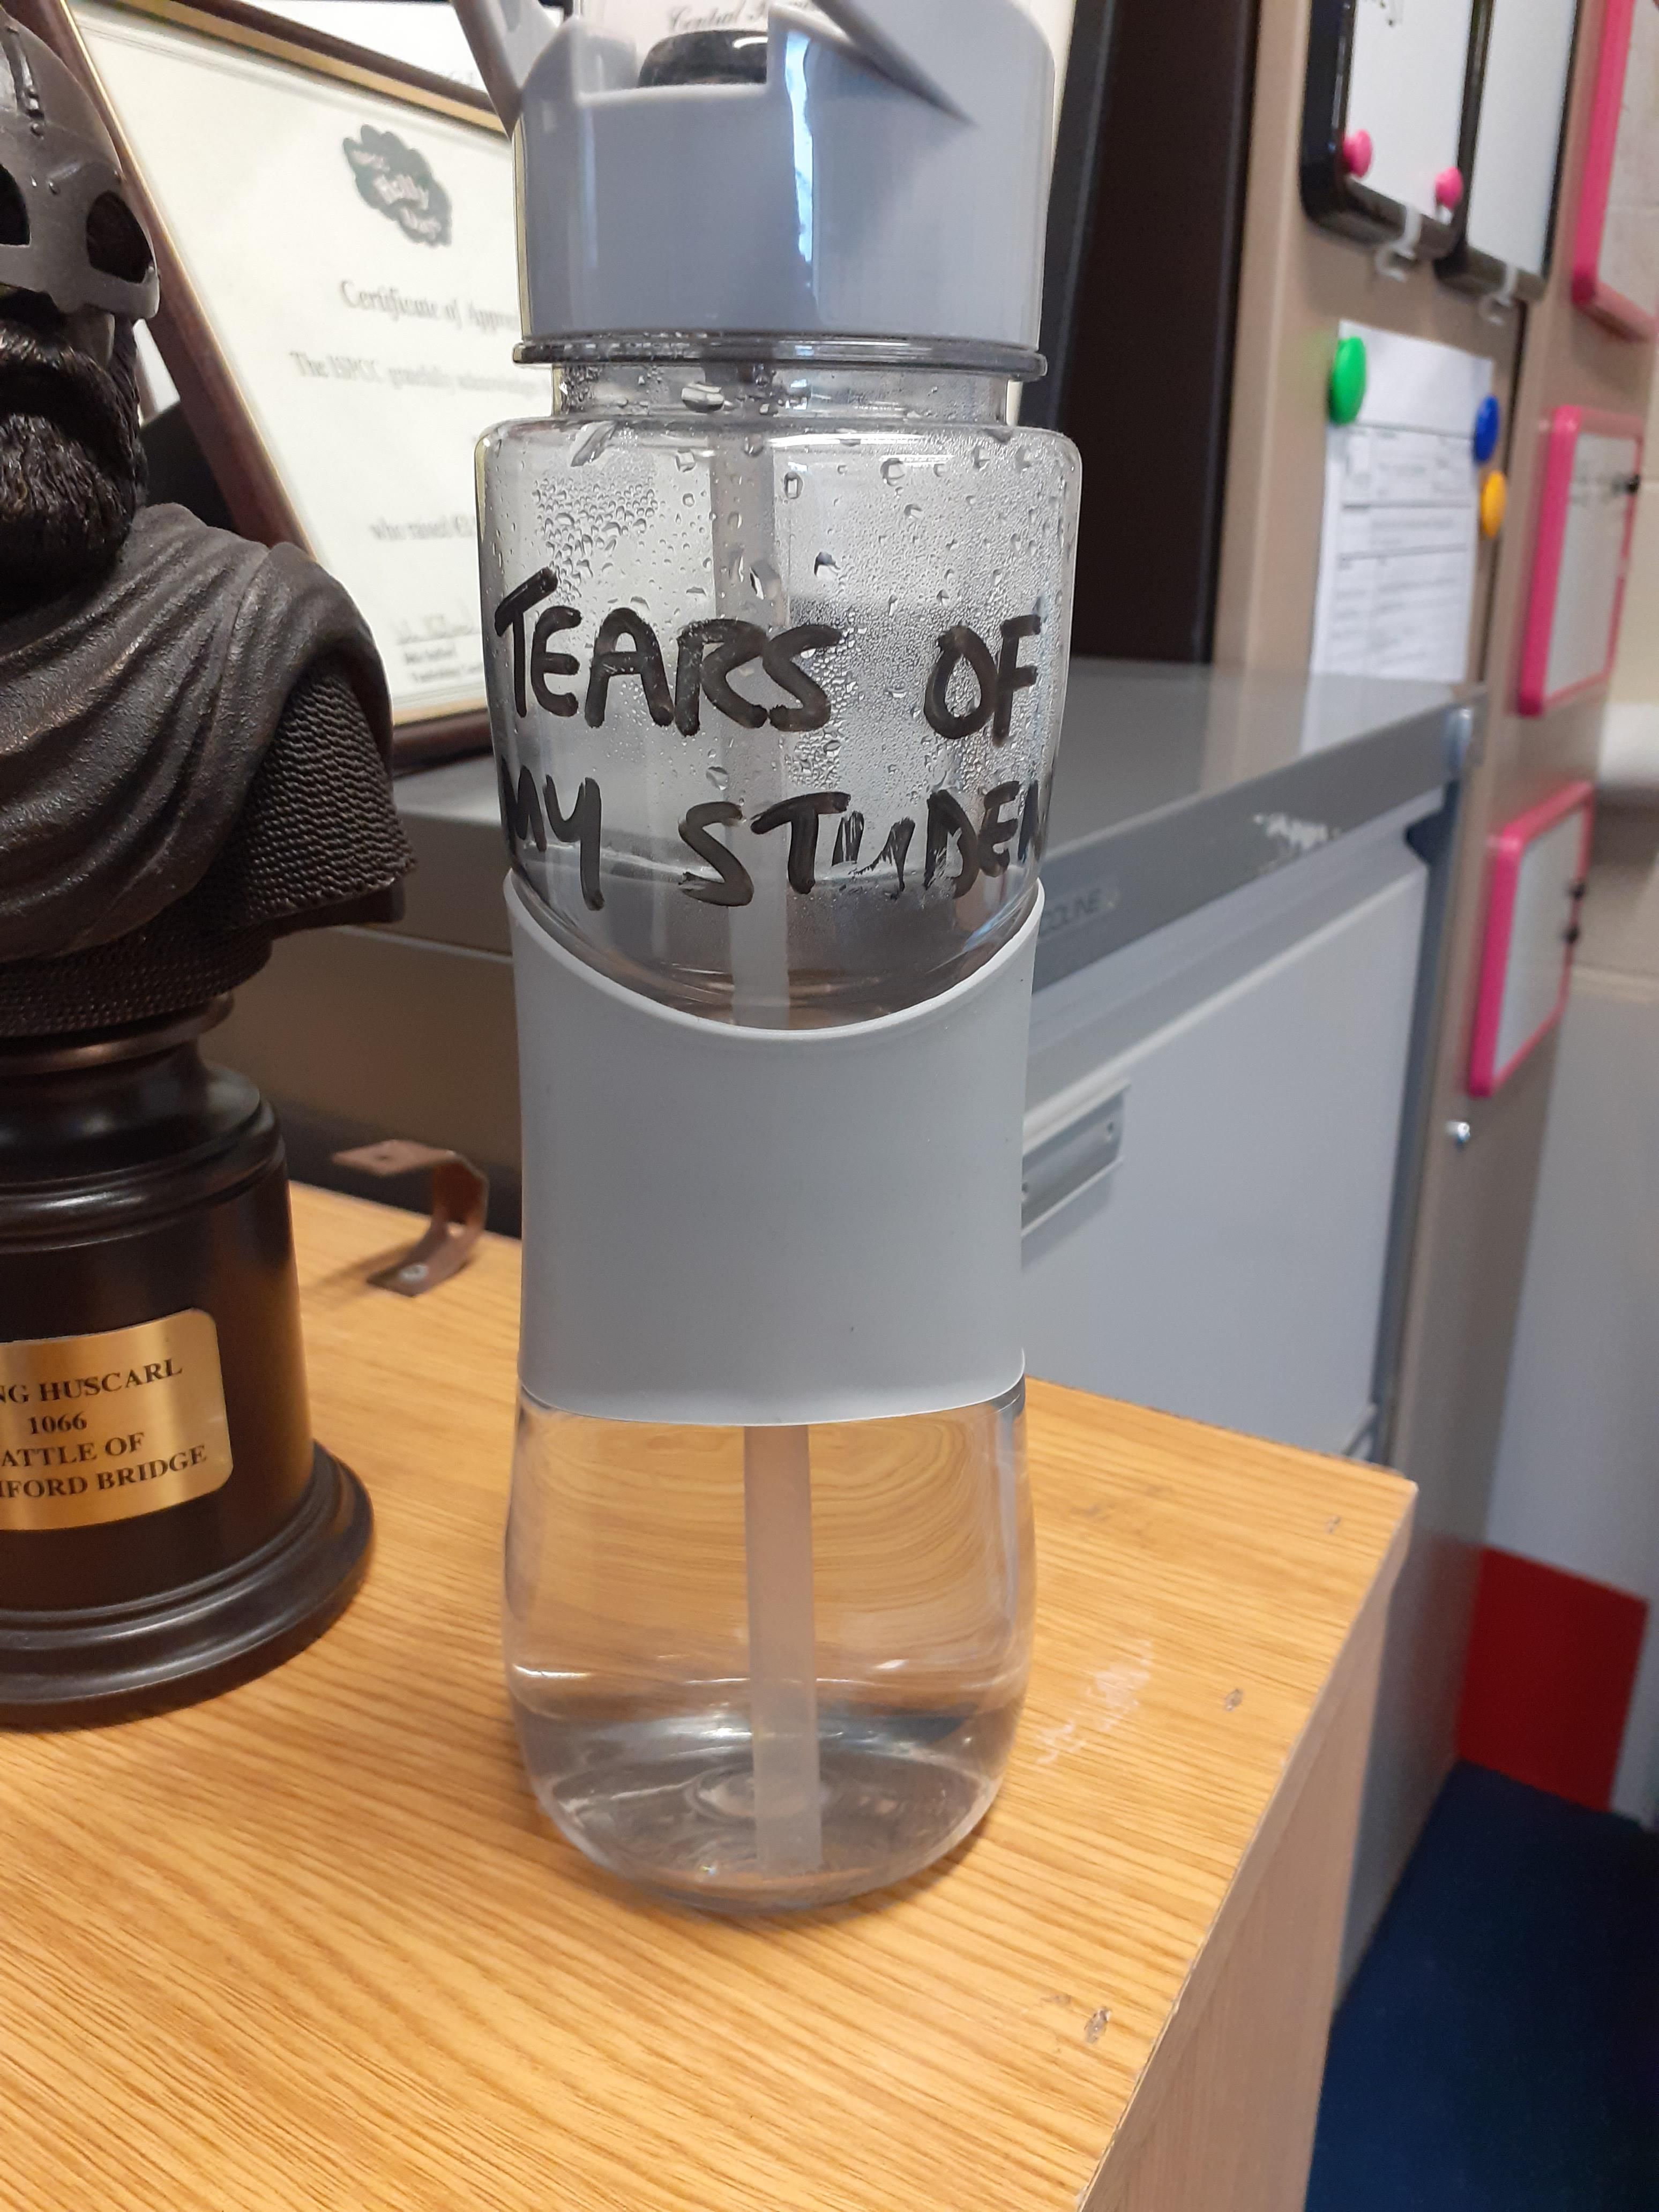 My history teacher's water bottle reads "Tears Of My Students"